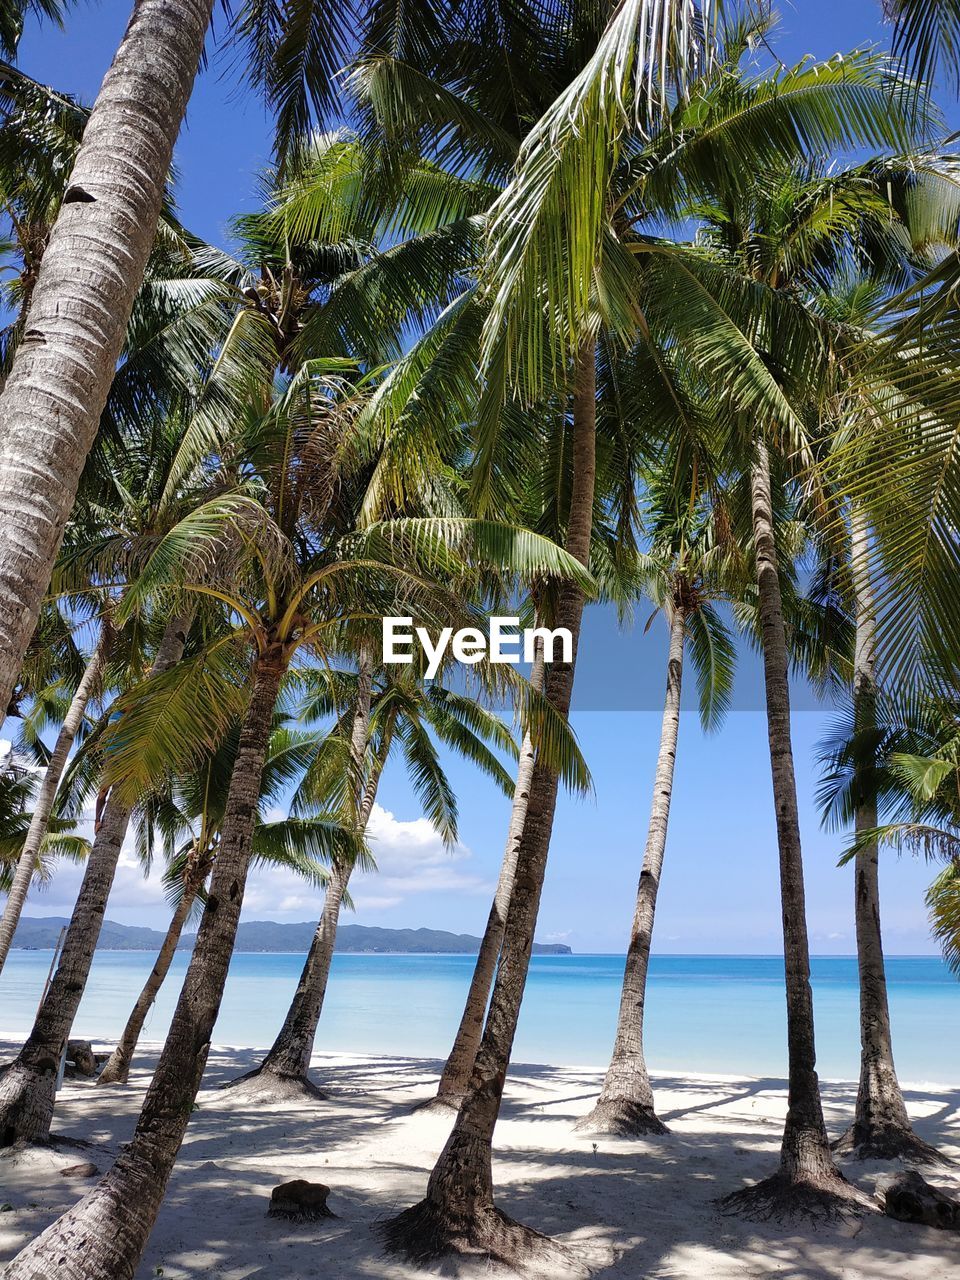 PALM TREES ON BEACH